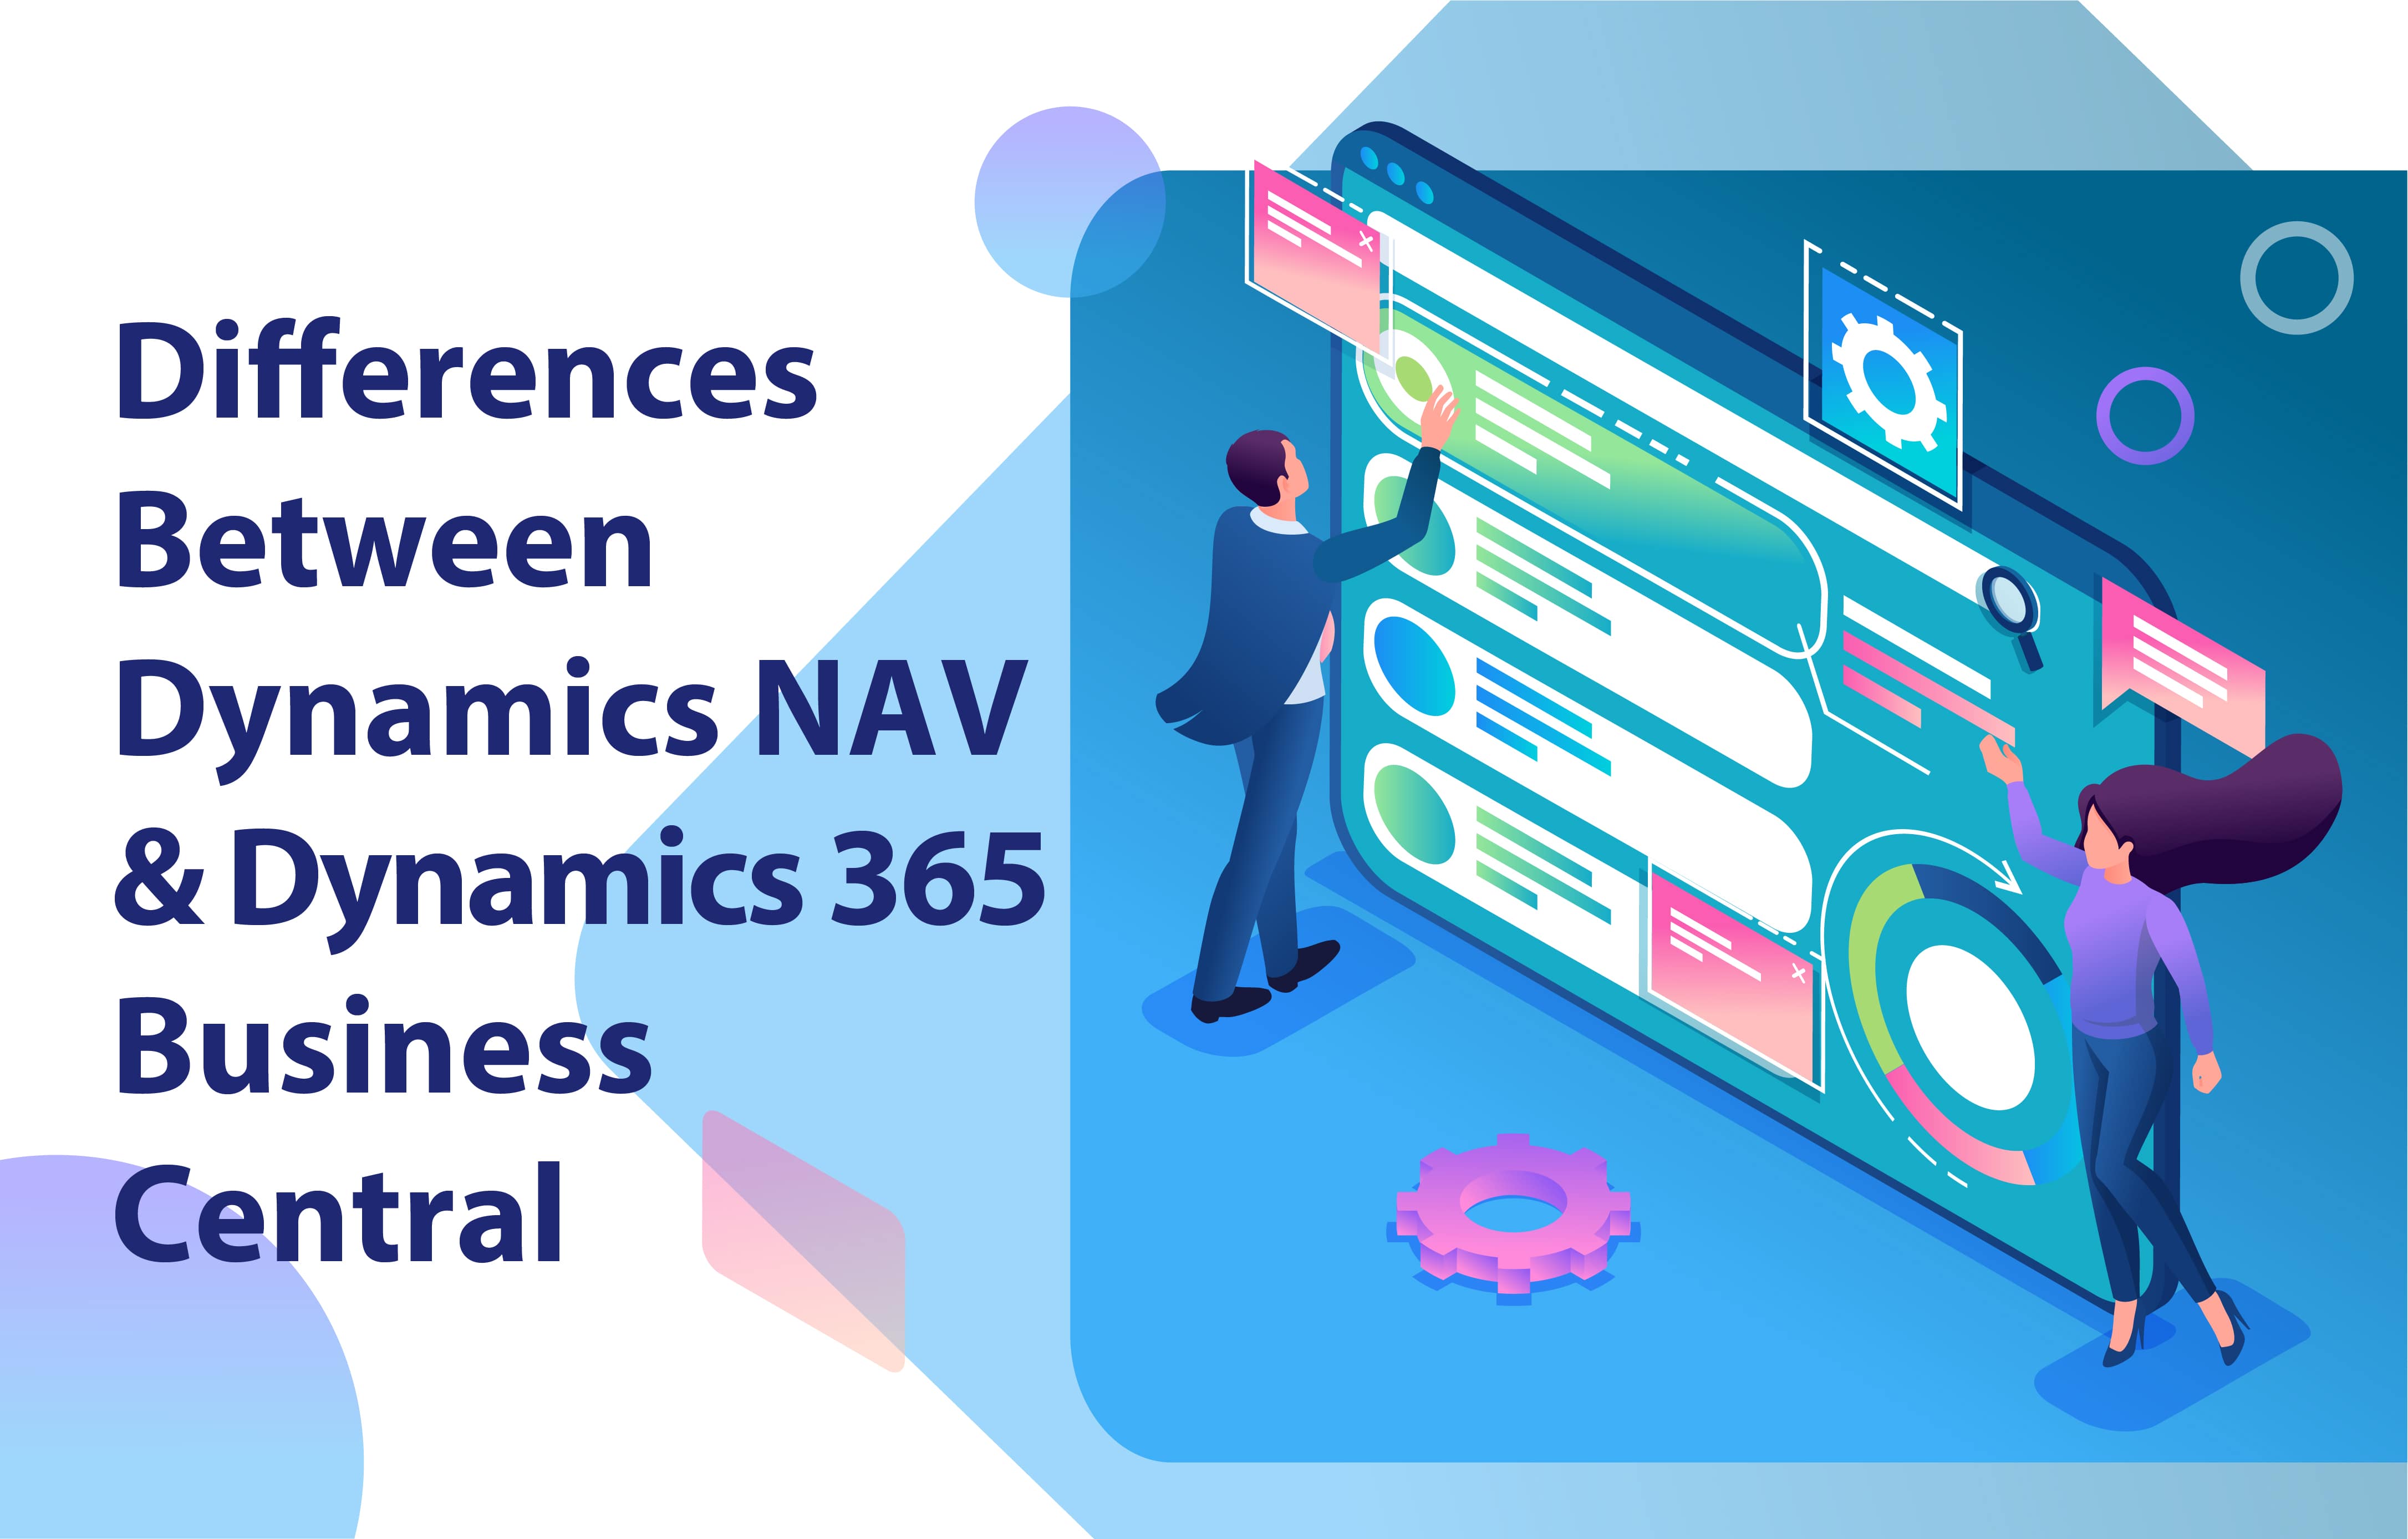 چه تفاوتی میان Dynamics NAV و Dynamics 365 Business Central وجود دارد؟